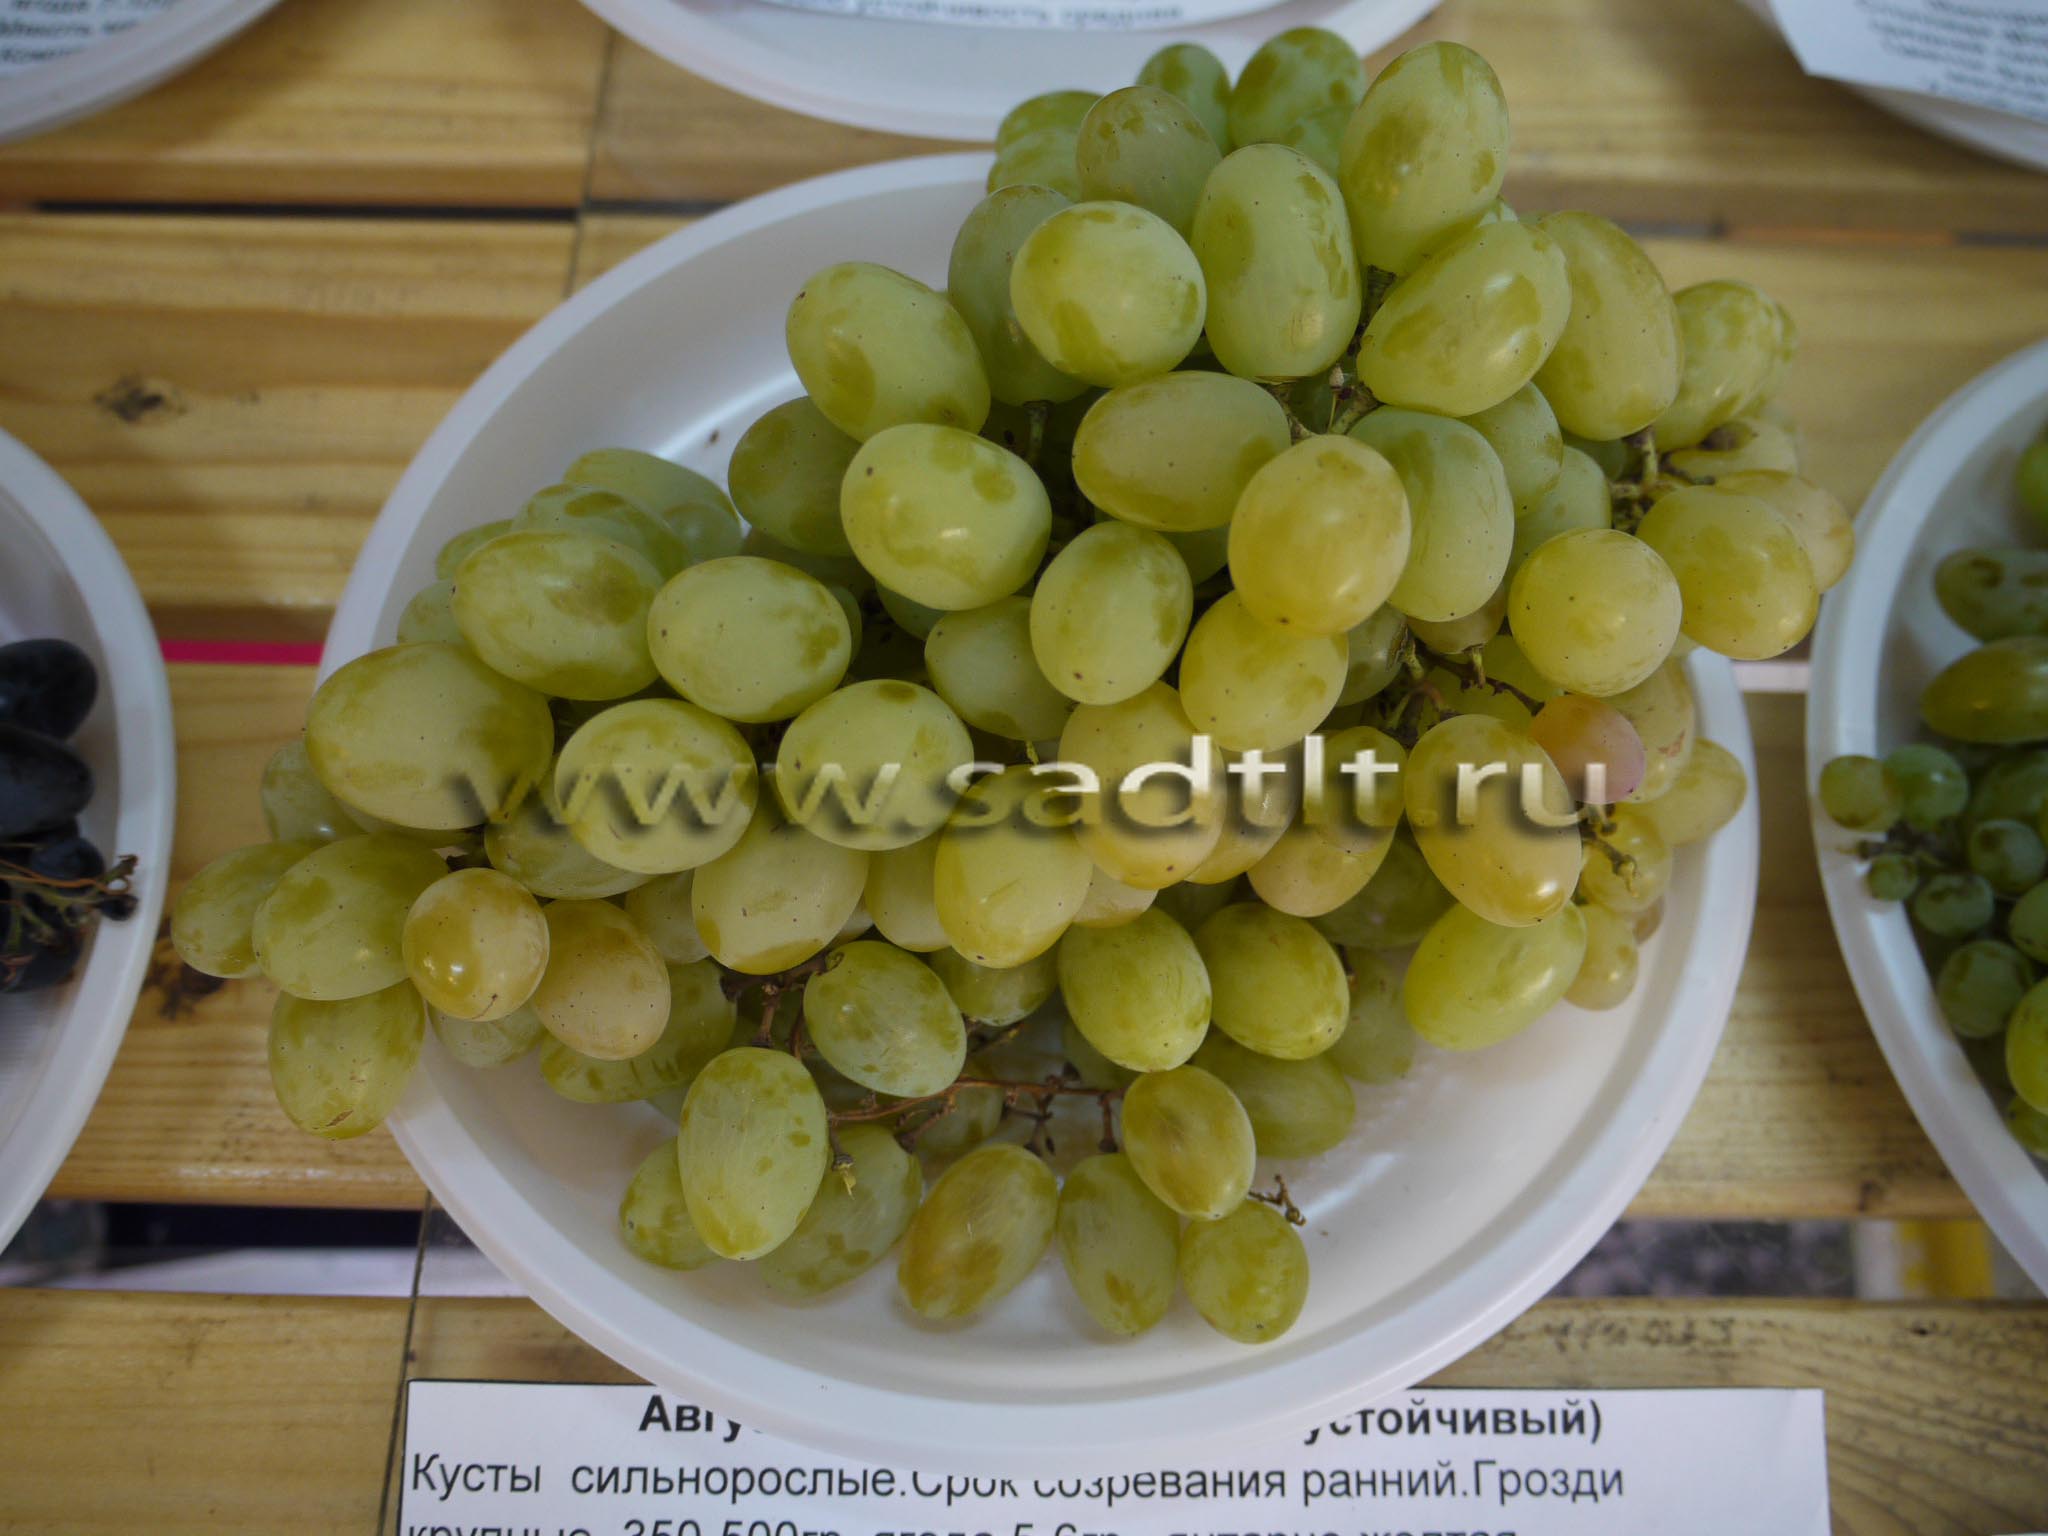 Сорт винограда августин, купить виноград, саженцы винограда, тольятти